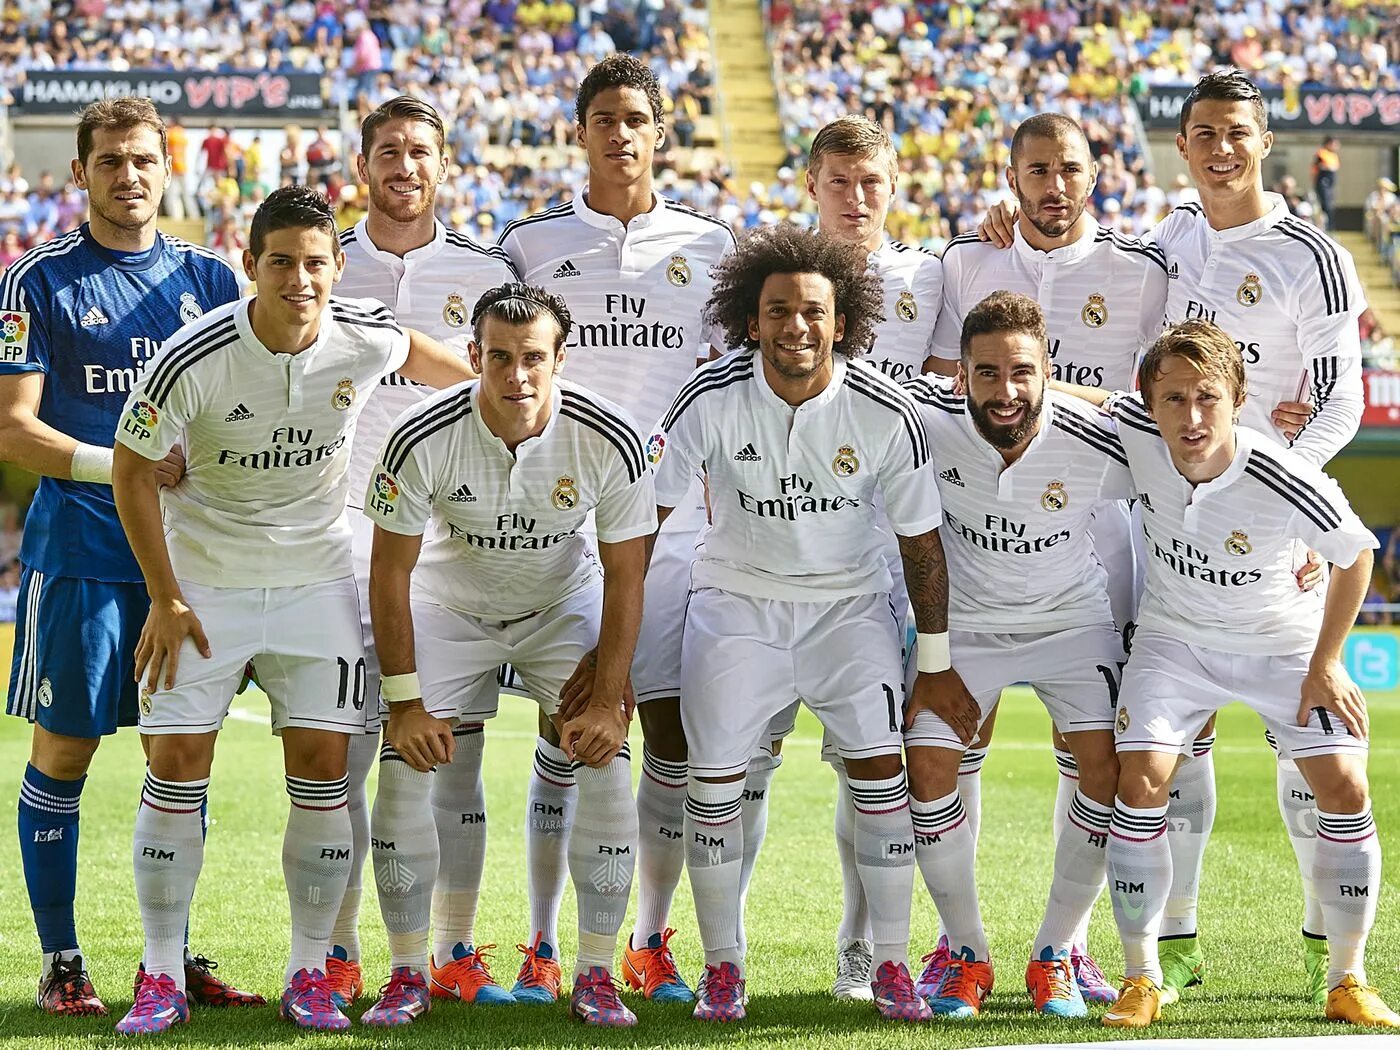 2014 2015 году. Команда Реал Мадрид состав 2016. Состав команды Реал Мадрид 2015-2016. Команда Реал Мадрид 2014. Реал Мадрид состав команды.